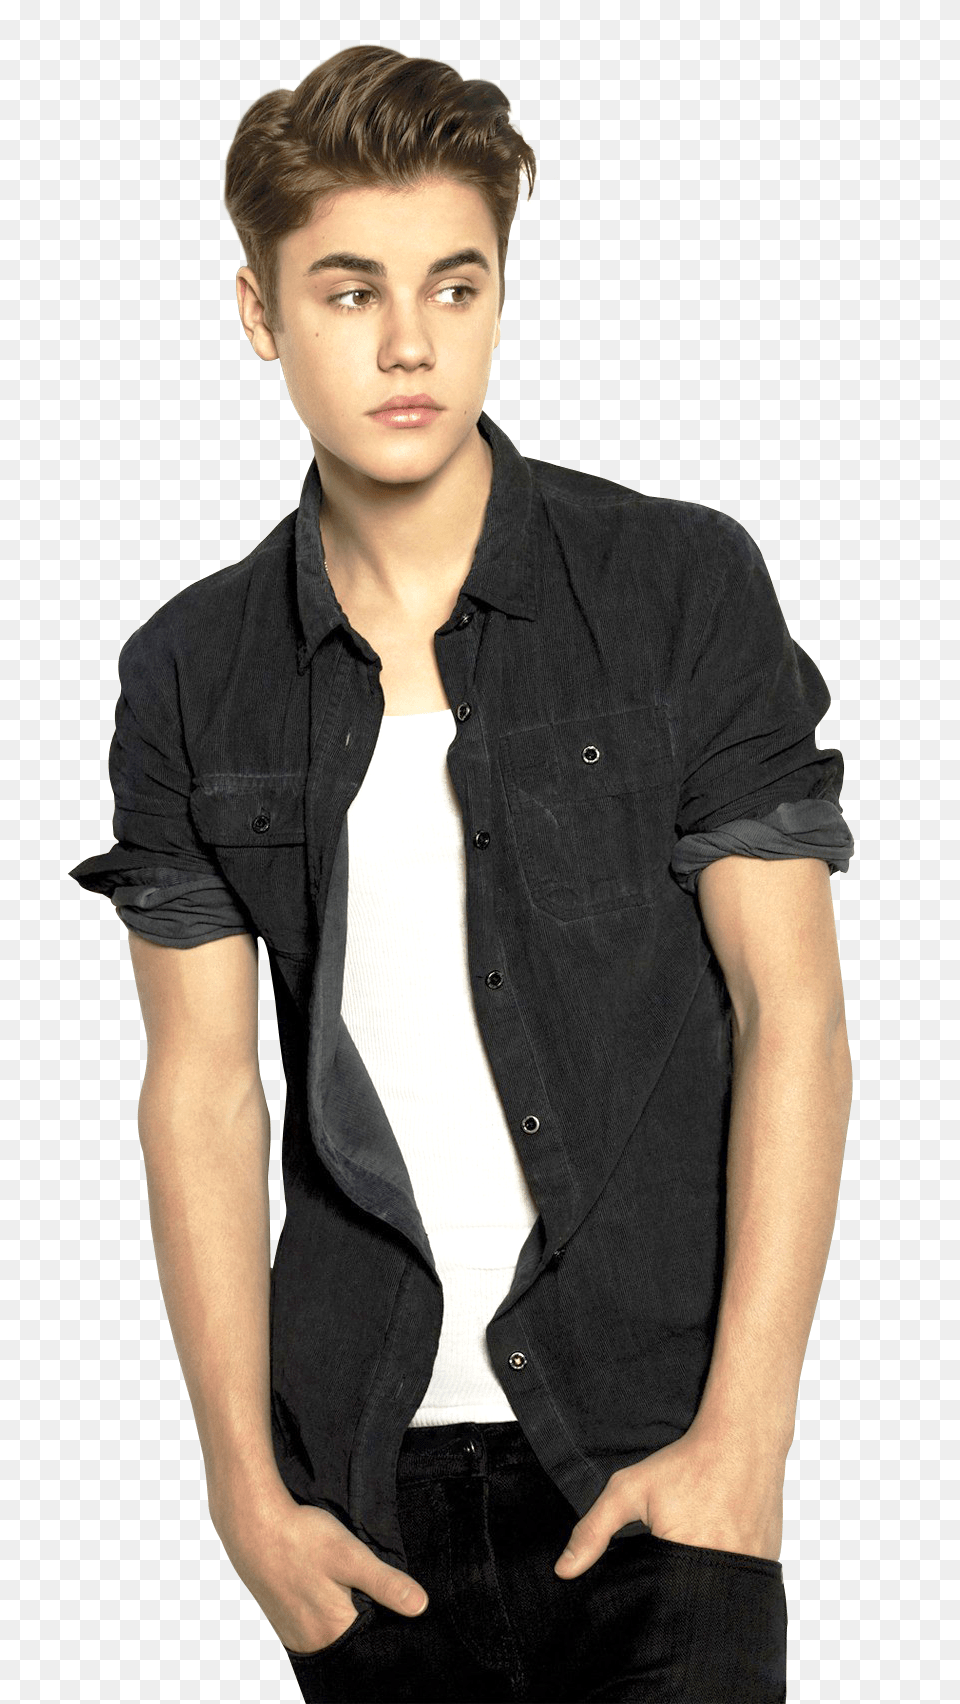 Pngpix Com Justin Bieber Transparent, Vest, Shirt, Jacket, Coat Free Png Download